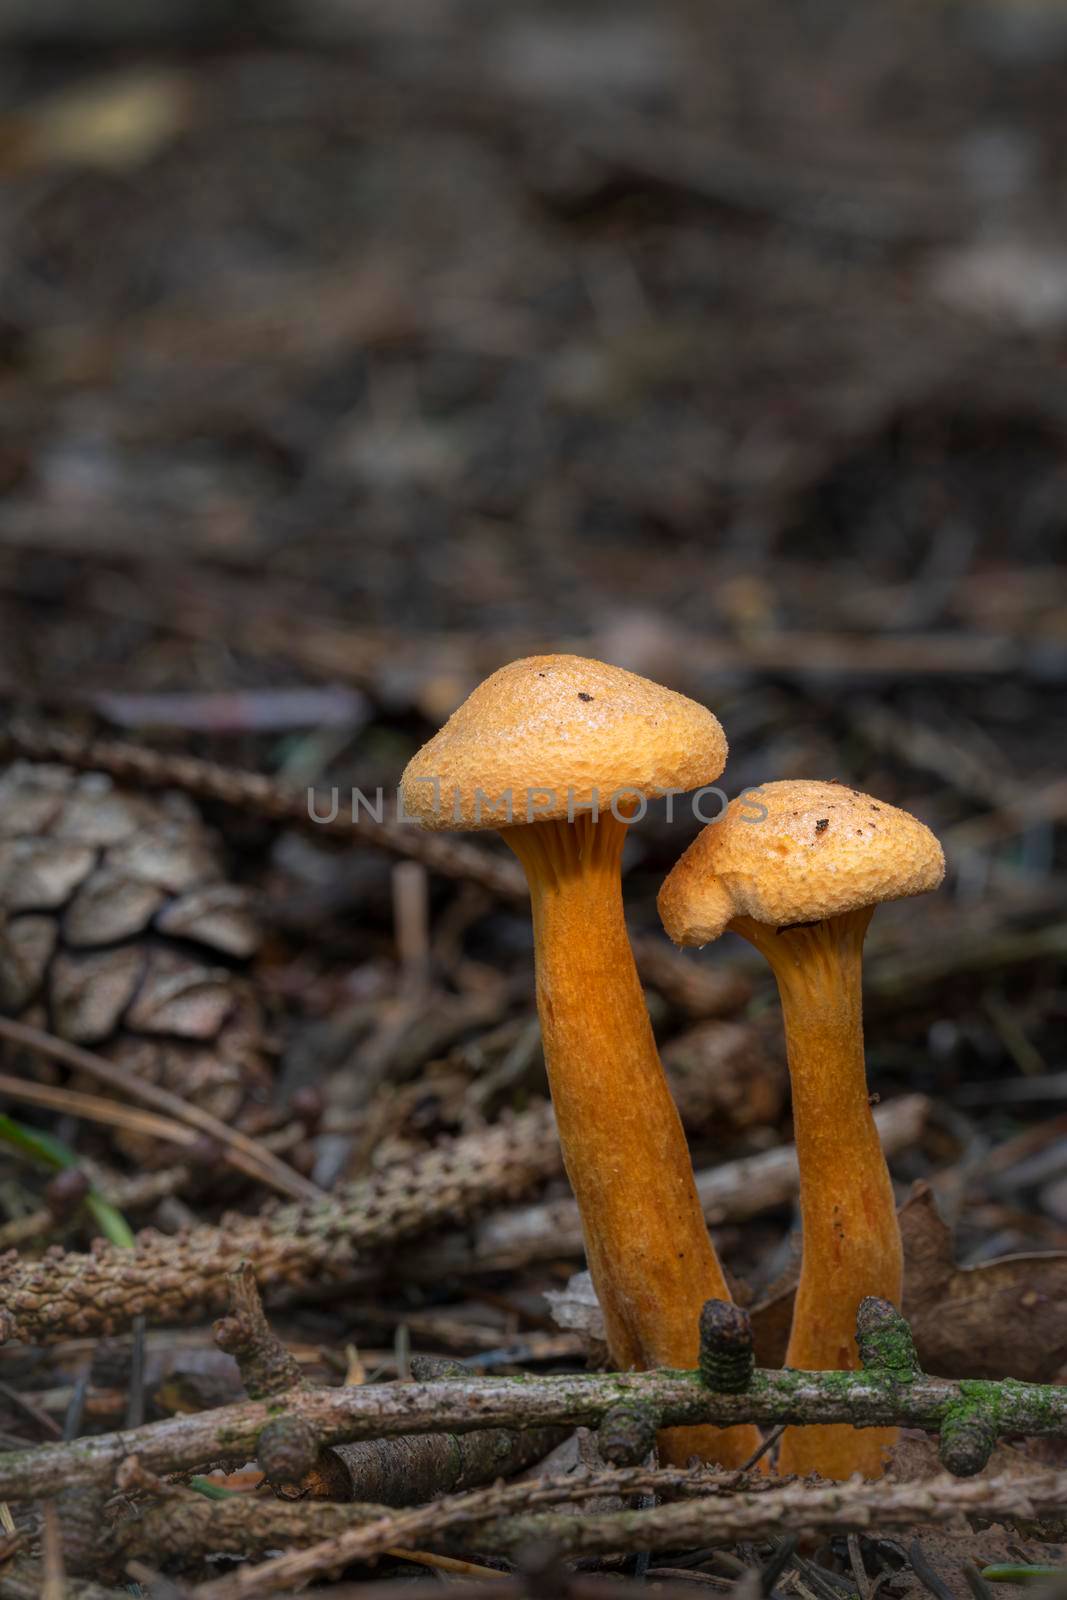 Mushrooms False Chanterelle Hygrophoropsis aurantiaca
 by Tofotografie